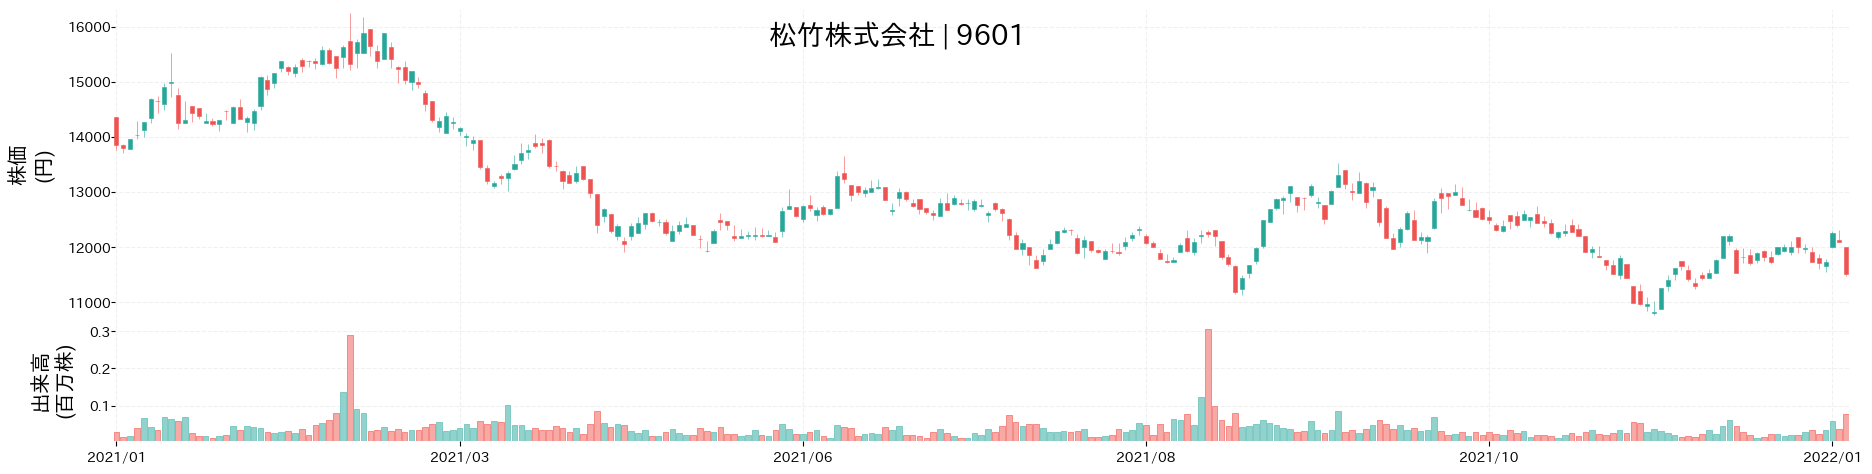 松竹の株価推移(2021)